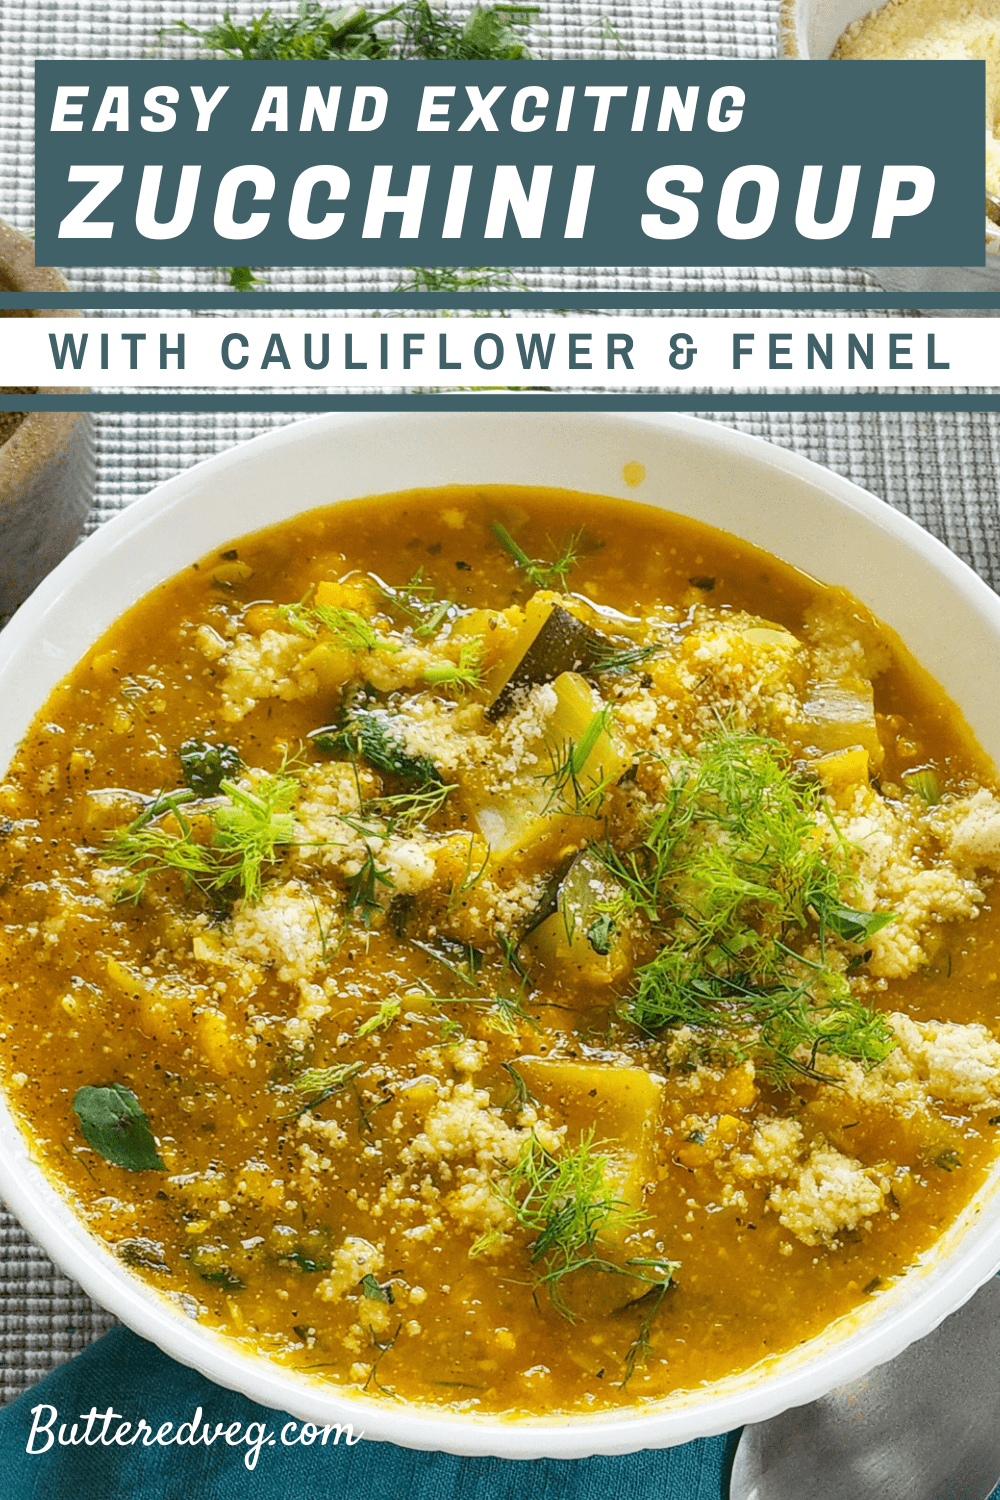 Zucchini Soup with Cauliflower & Fennel